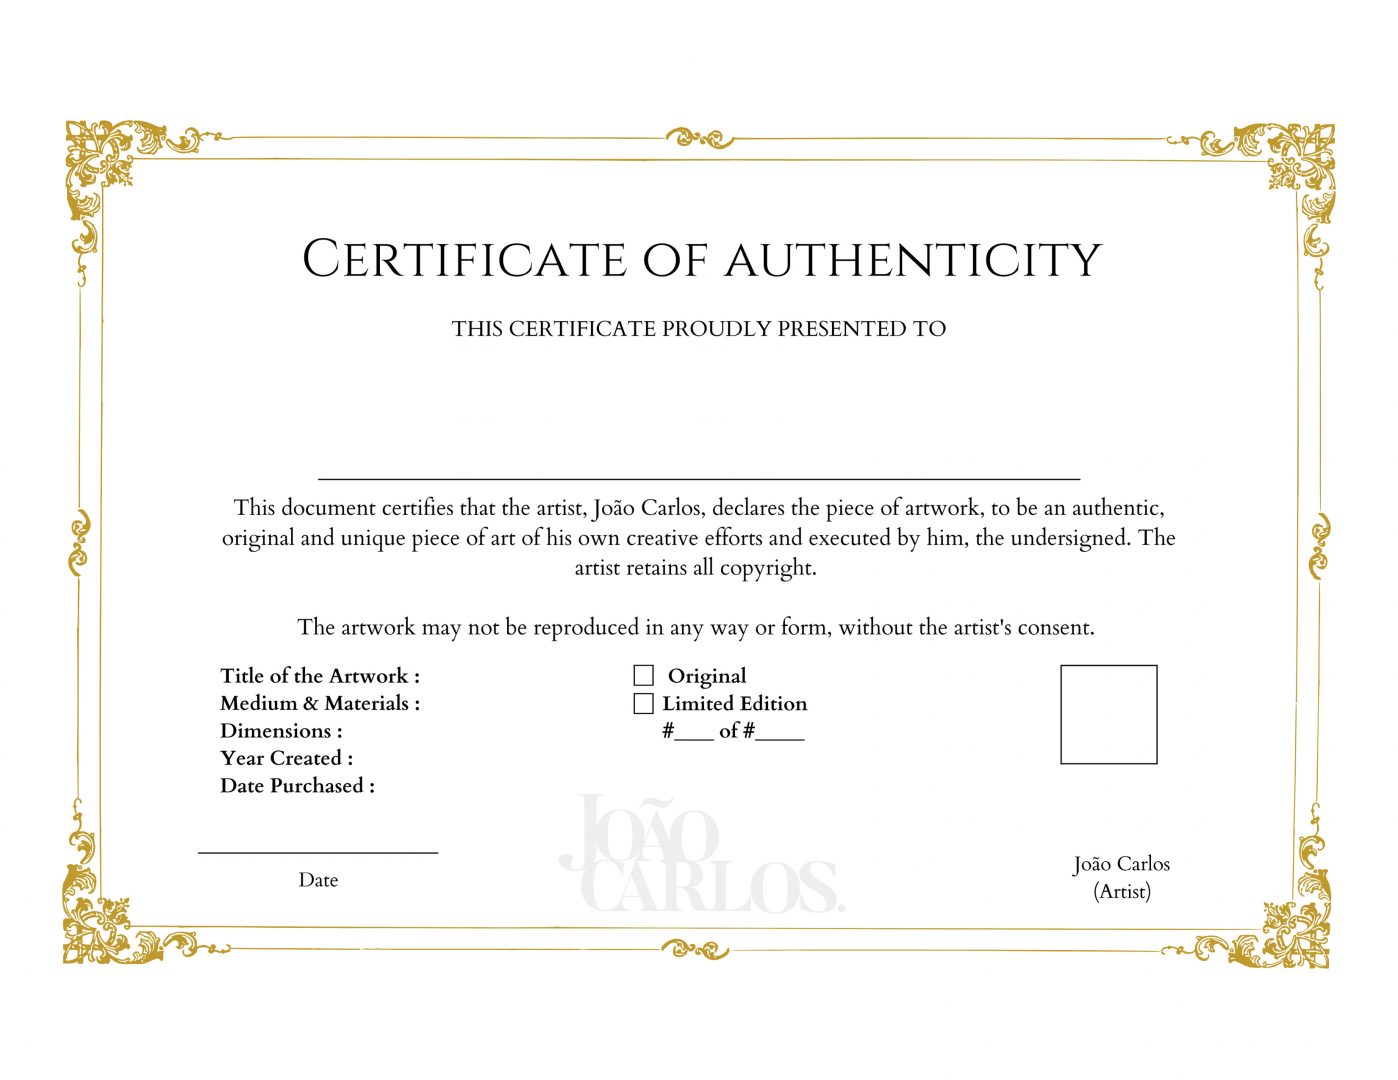 How to make a Certificate of Authenticity | João Carlos Photo ...